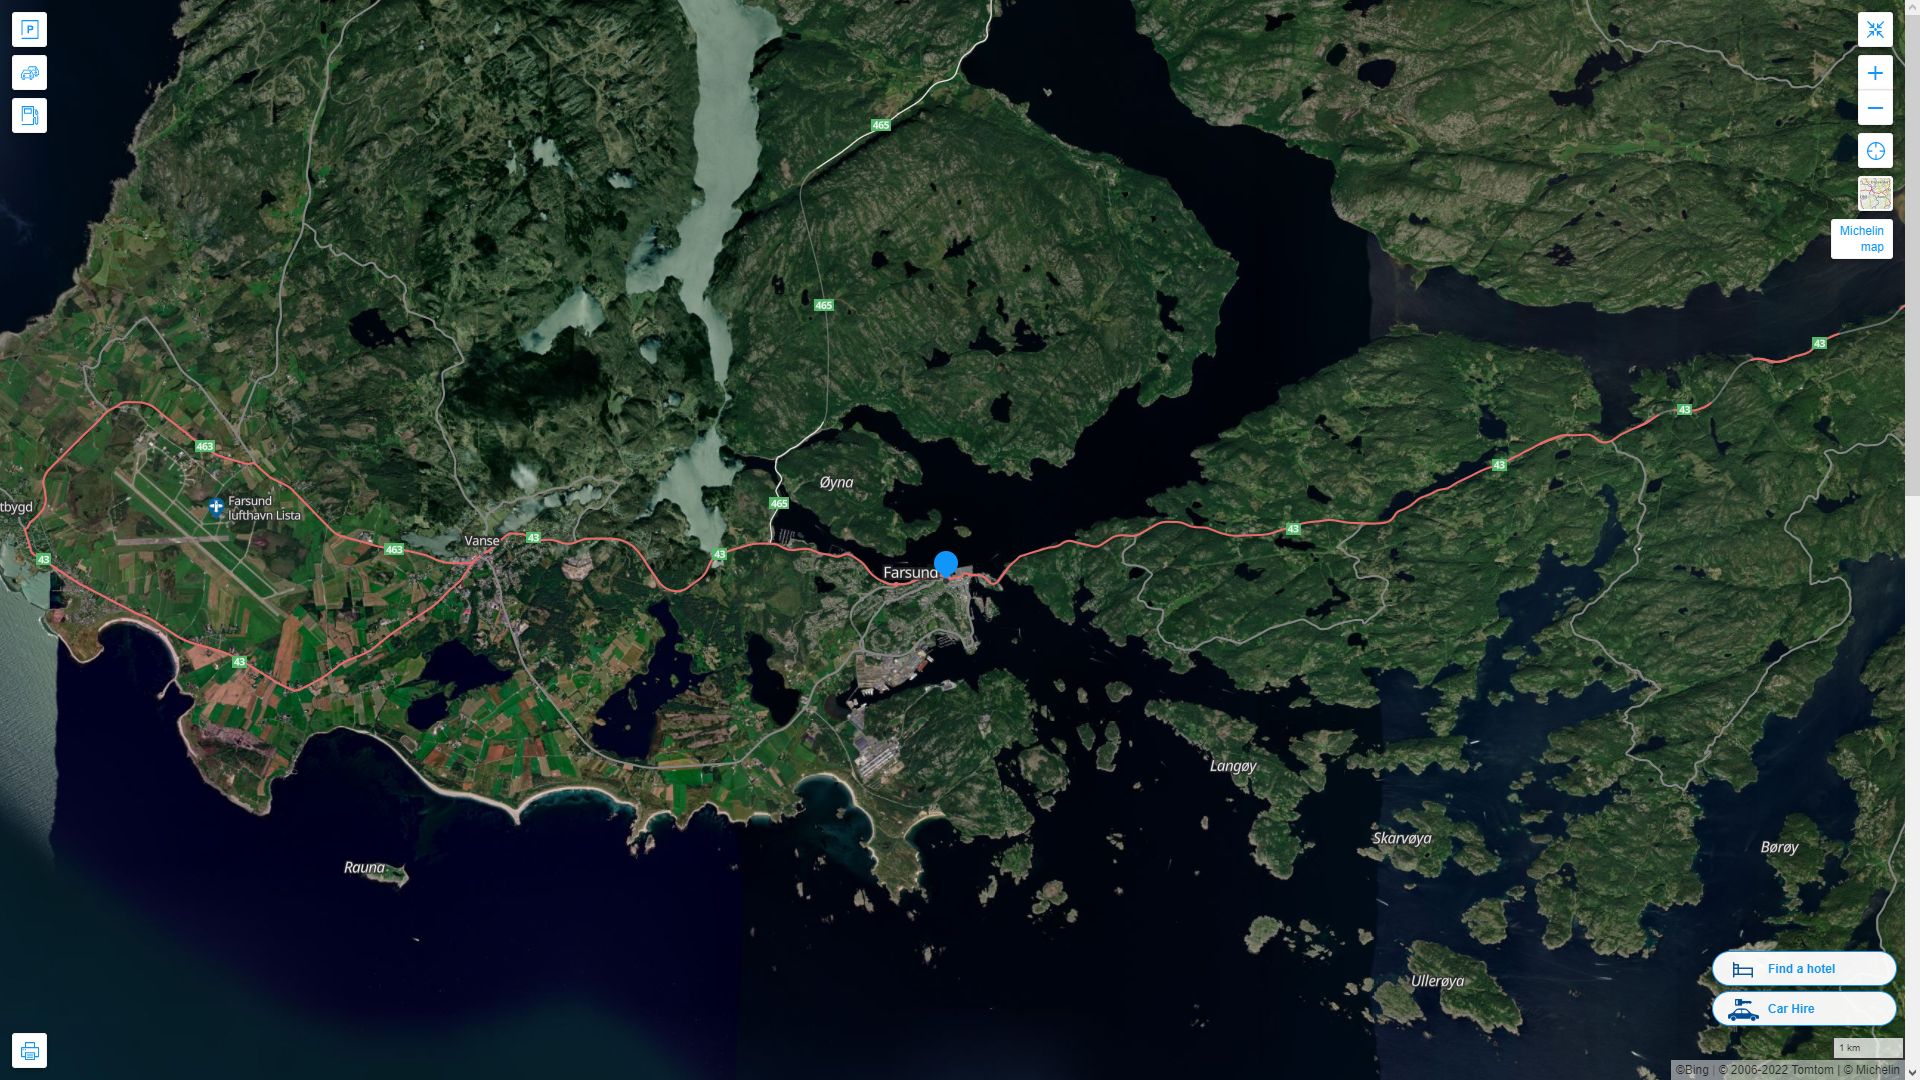 Farsund Norvege Autoroute et carte routiere avec vue satellite